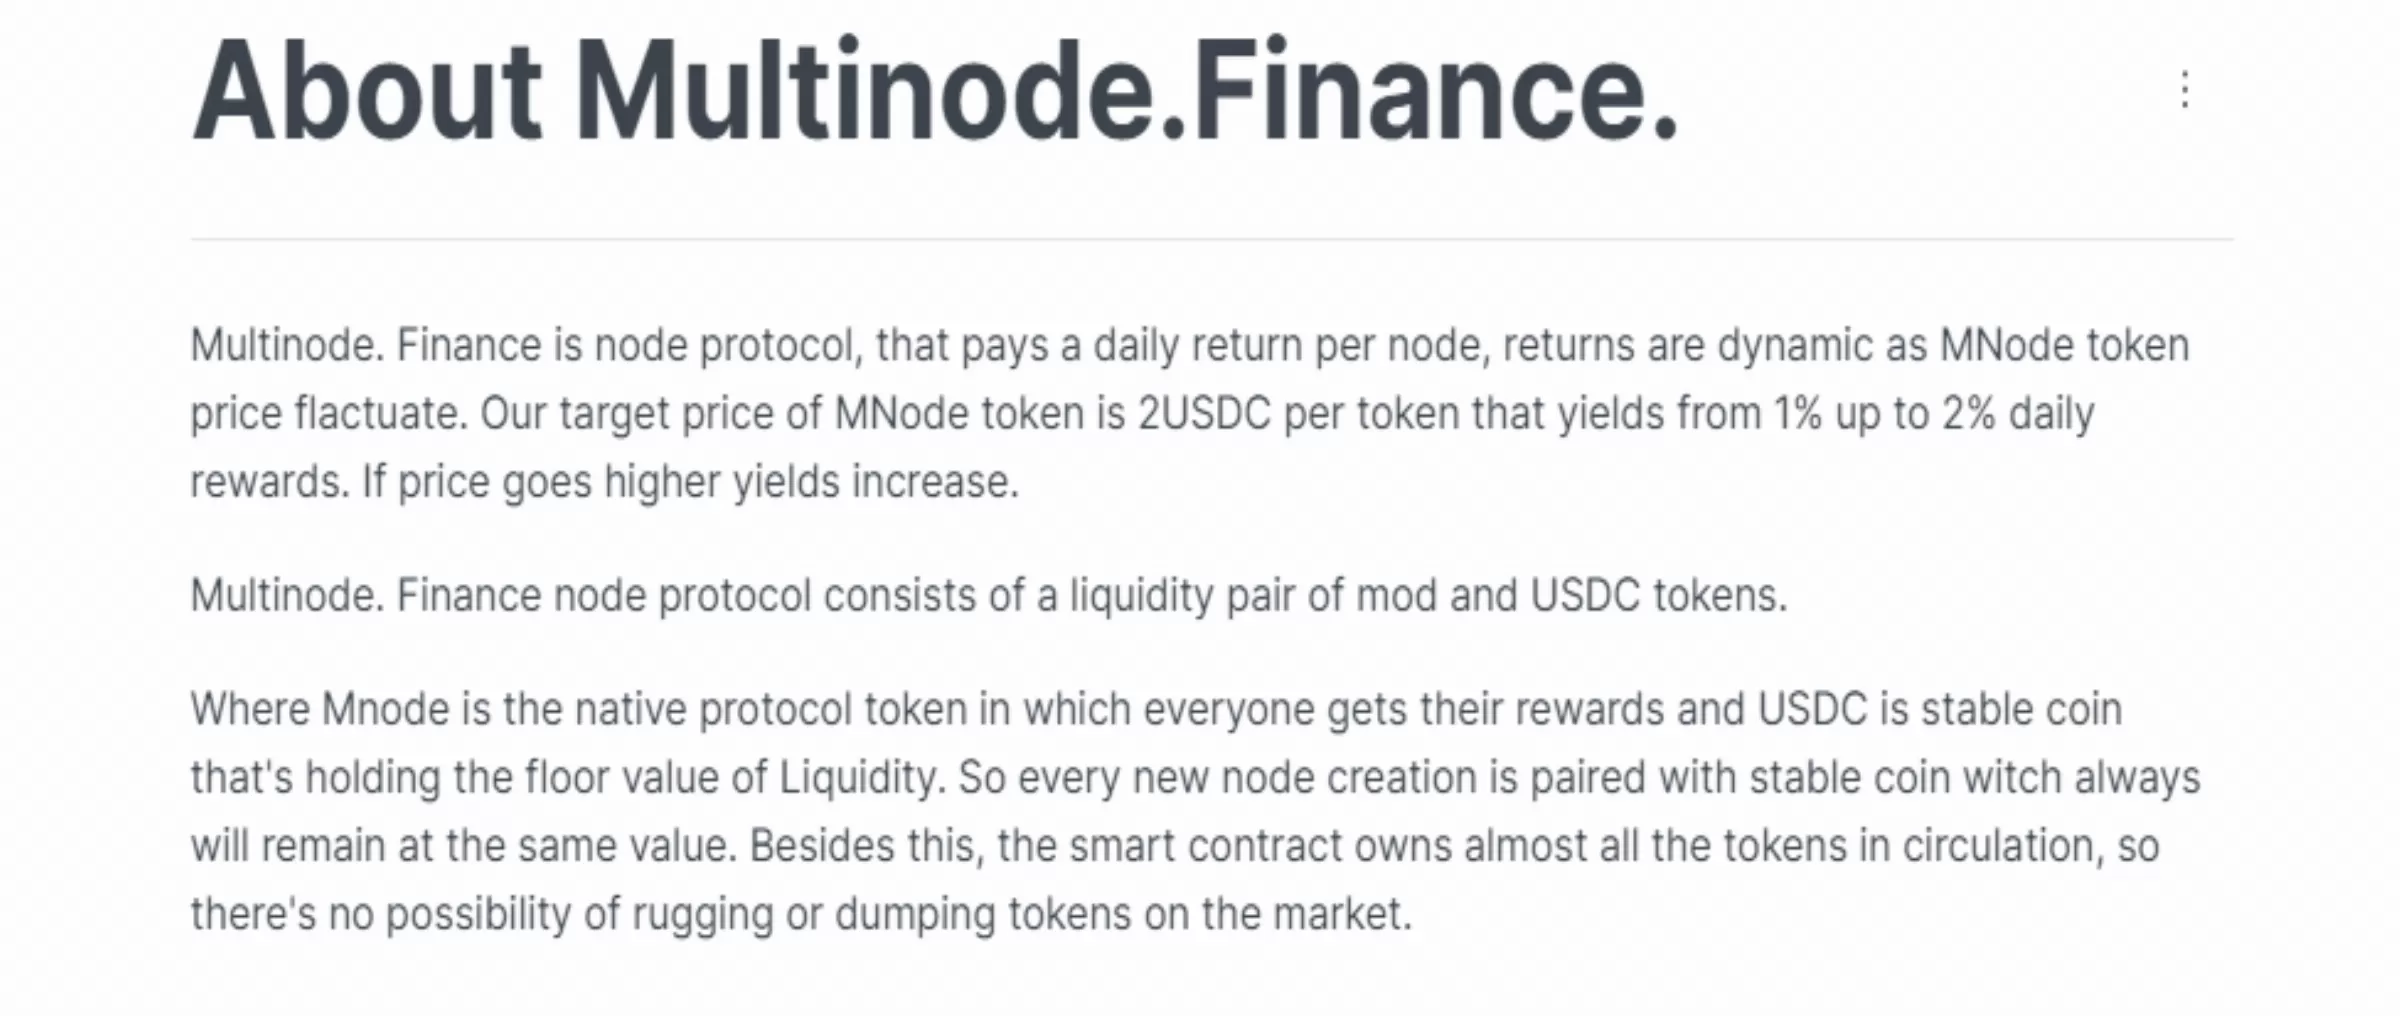 Multinode.Finance dapps